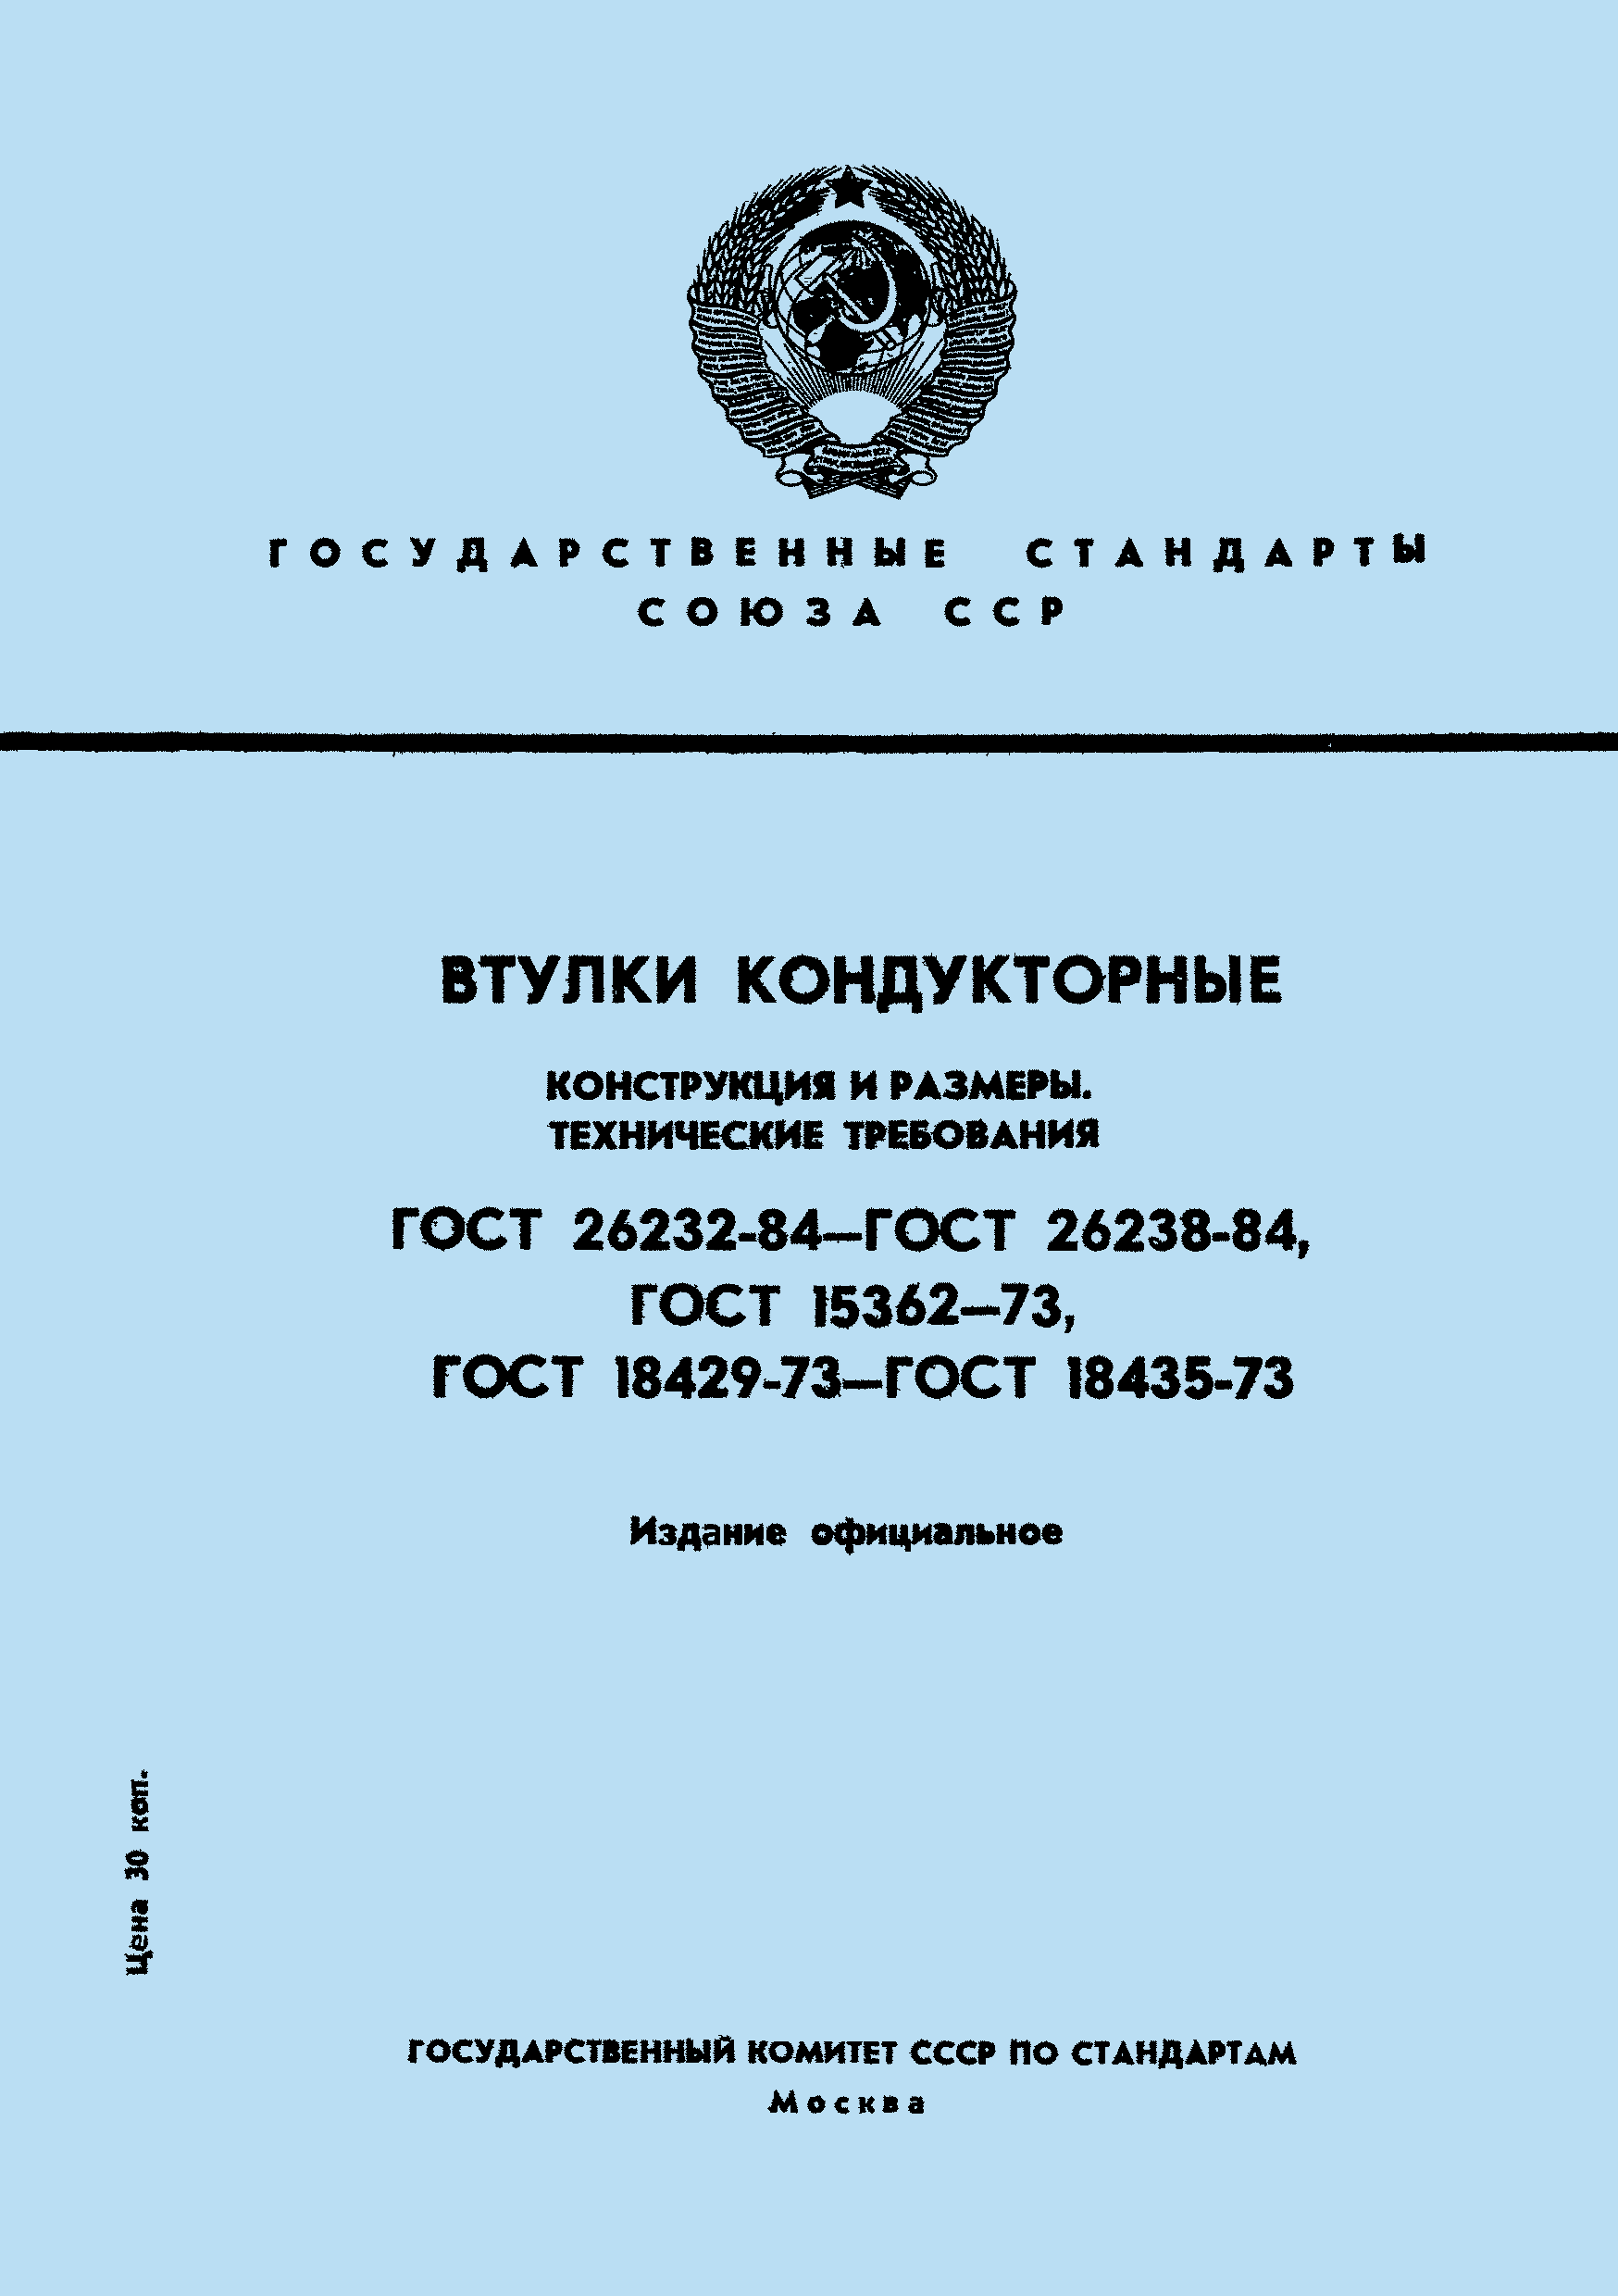 ГОСТ 26234-84